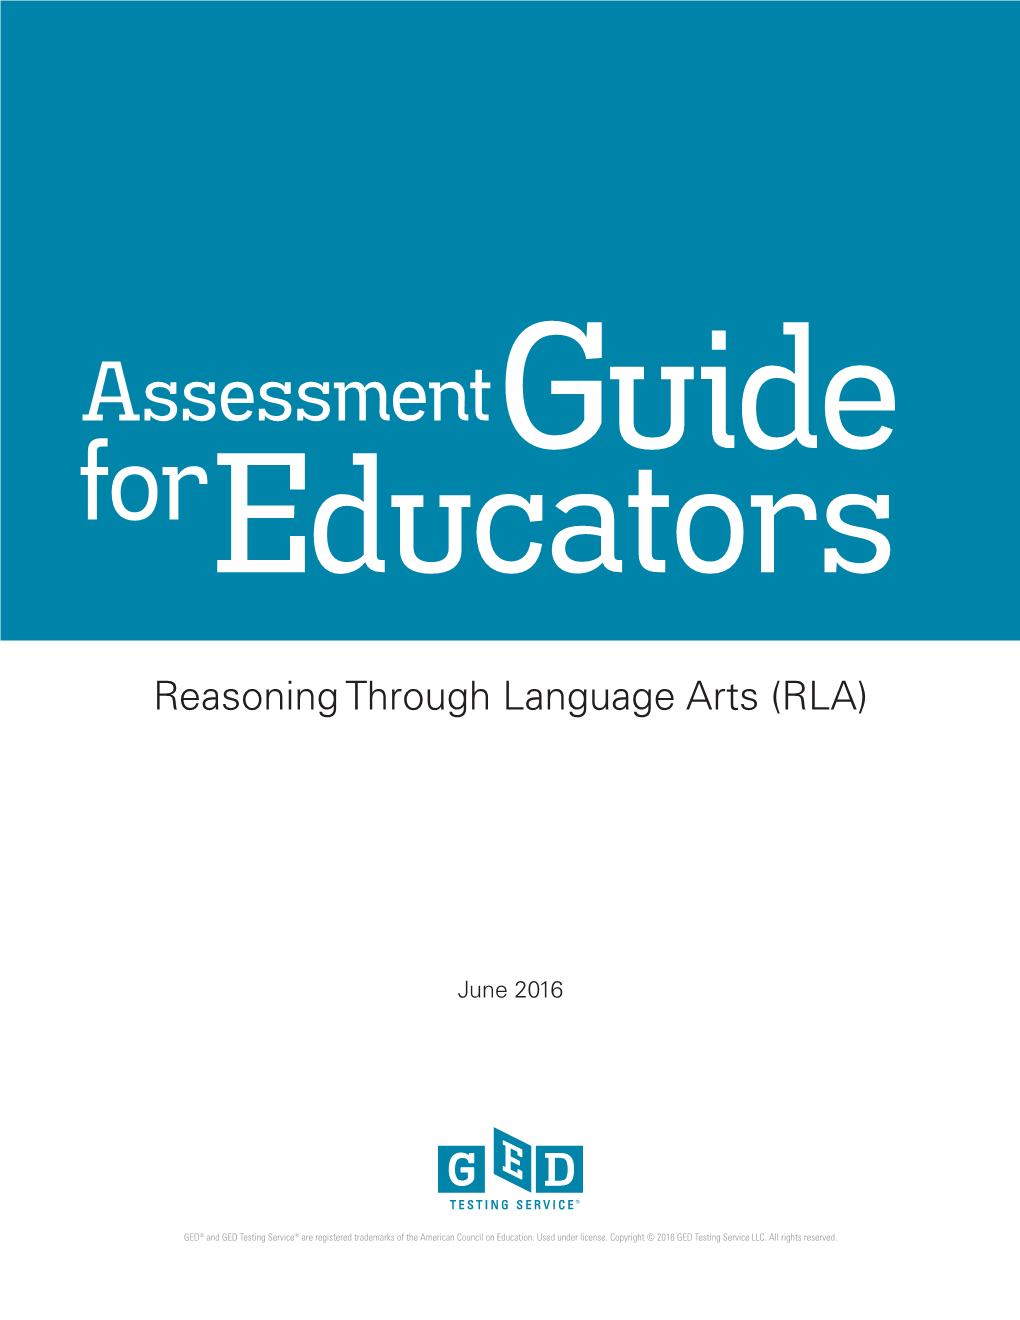 GED RLA Assessment Guide